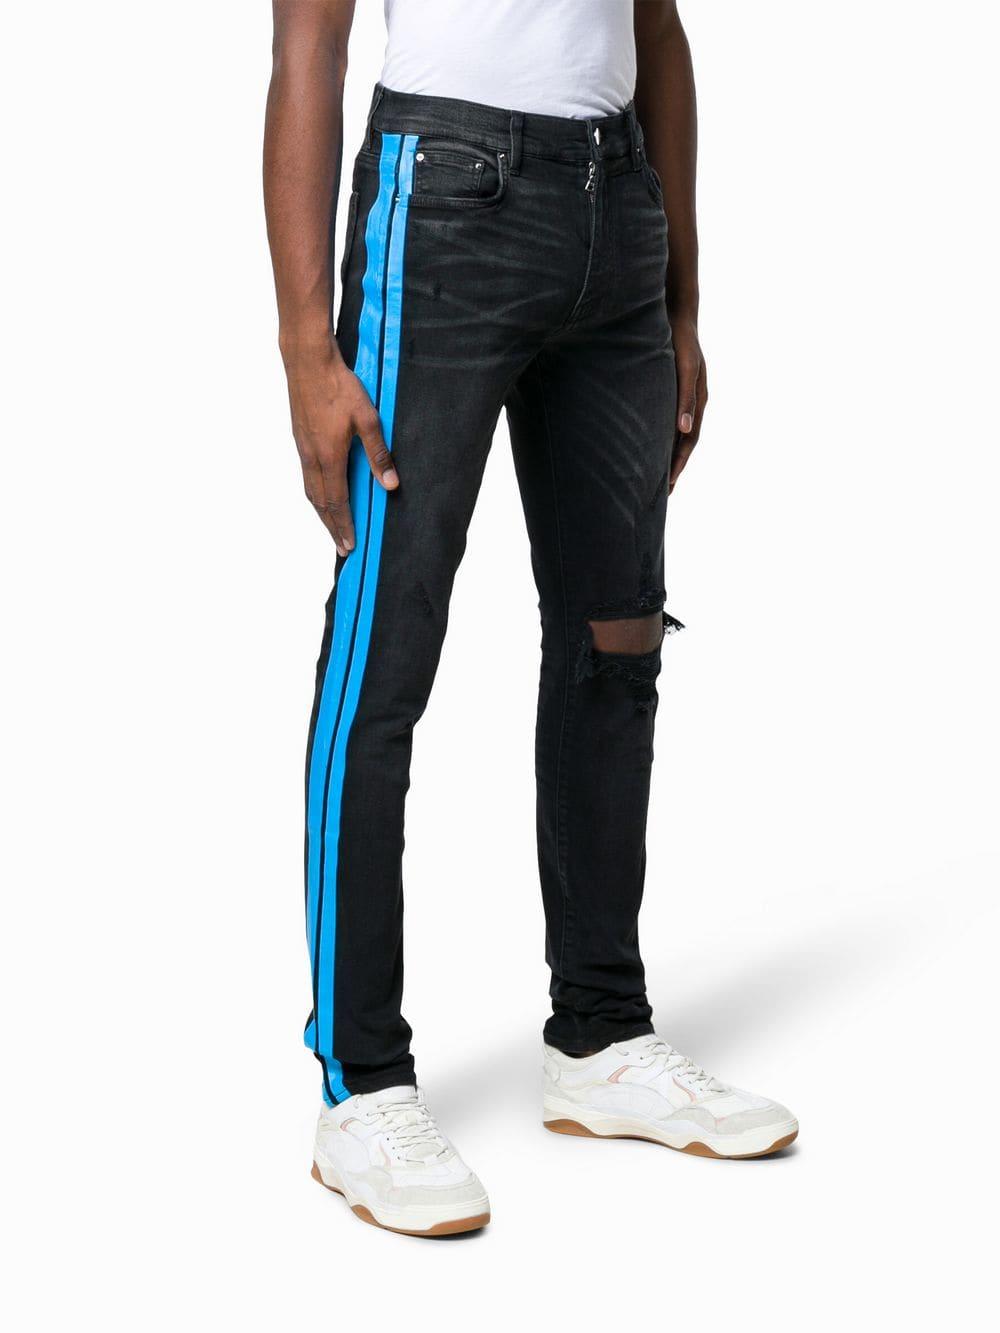 jeans with black stripe